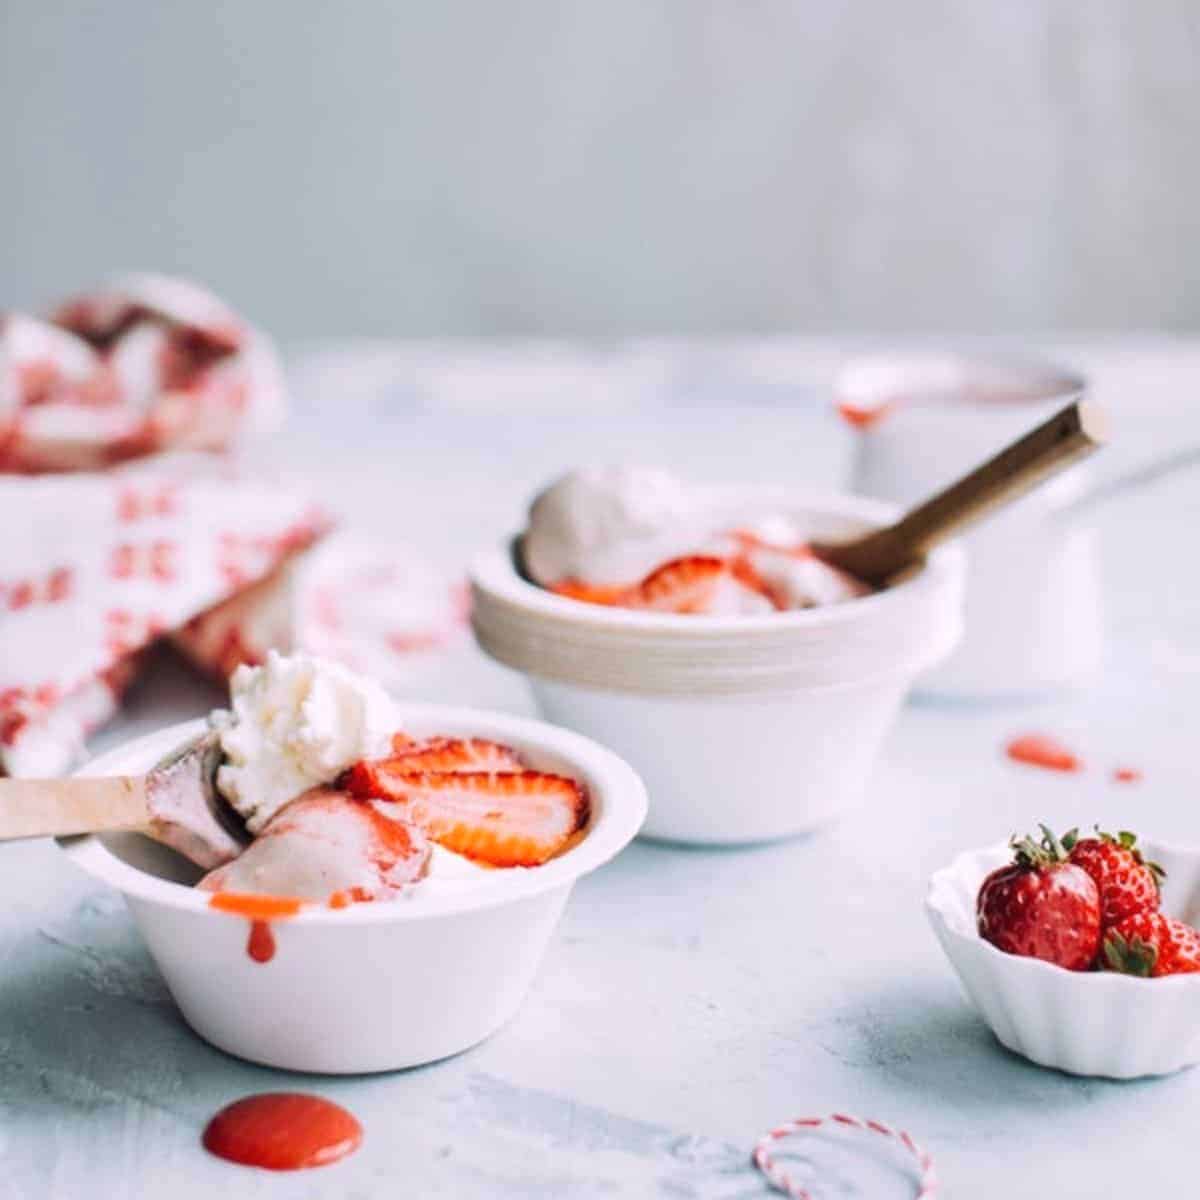 How to Make Easy Vegan Strawberry Ice Cream